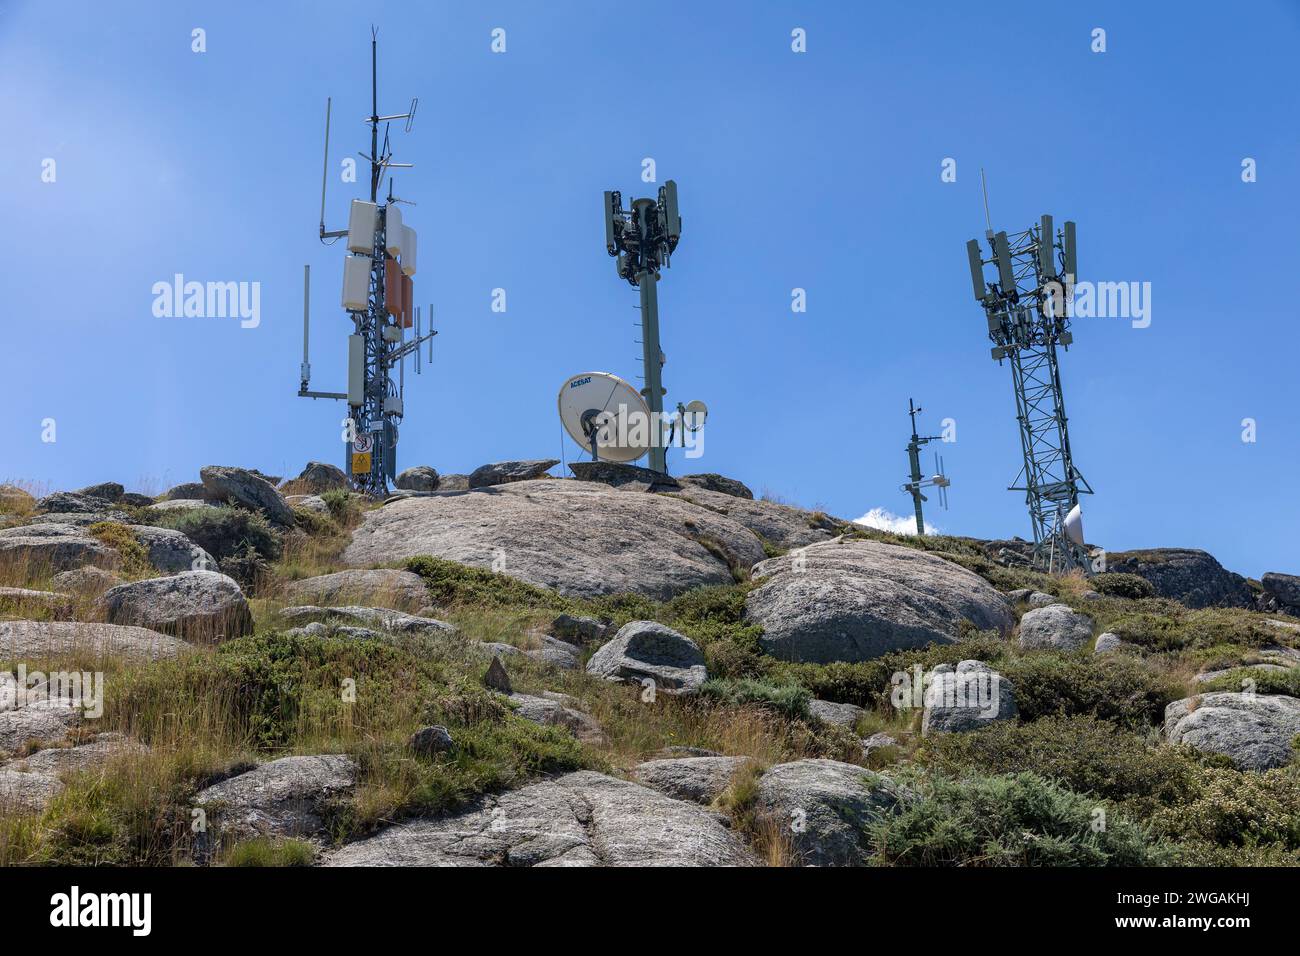 Telekommunikationsmasten zur Signalverstärkung im Kosciusko-Nationalpark in Thredbo, New South Wales, Australien Stockfoto